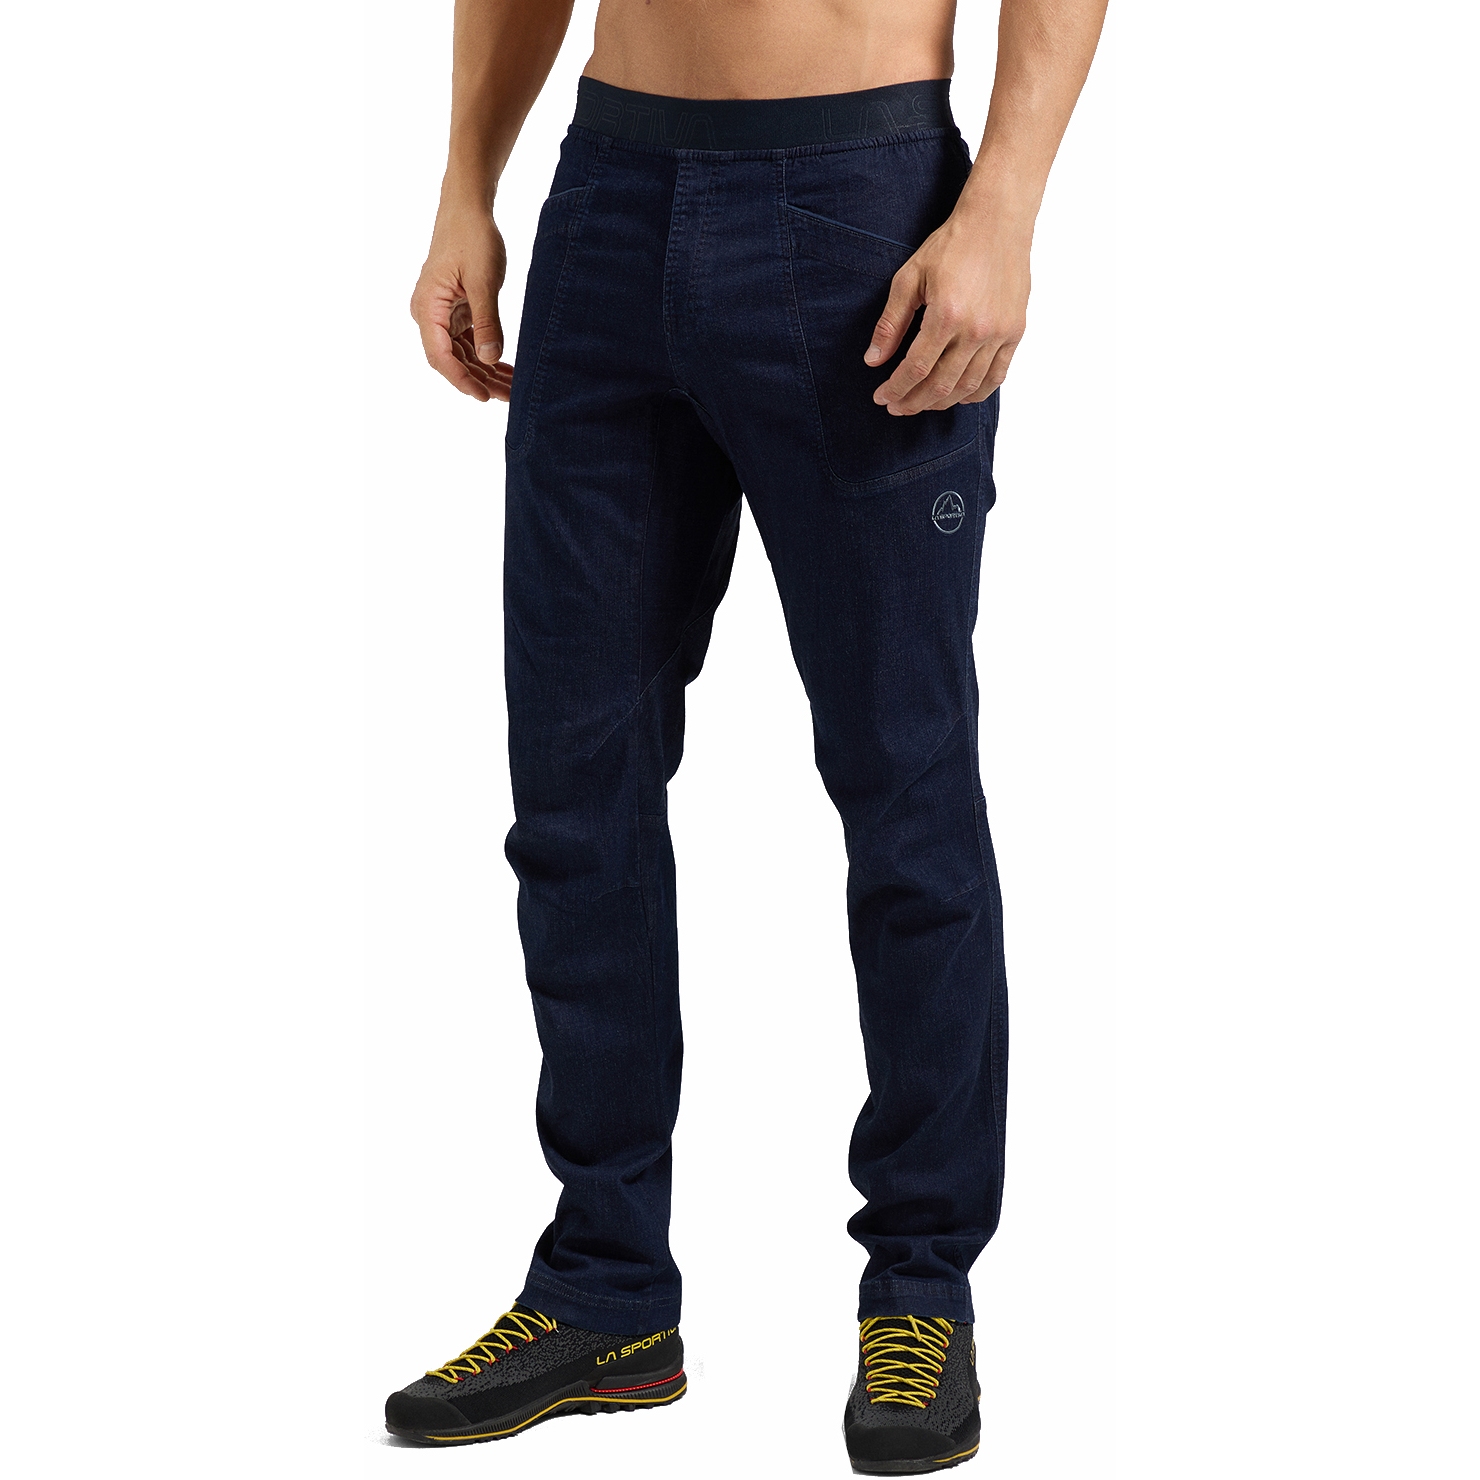 Produktbild von La Sportiva Cave Jeans Hose Herren - Jeans/Deep Sea